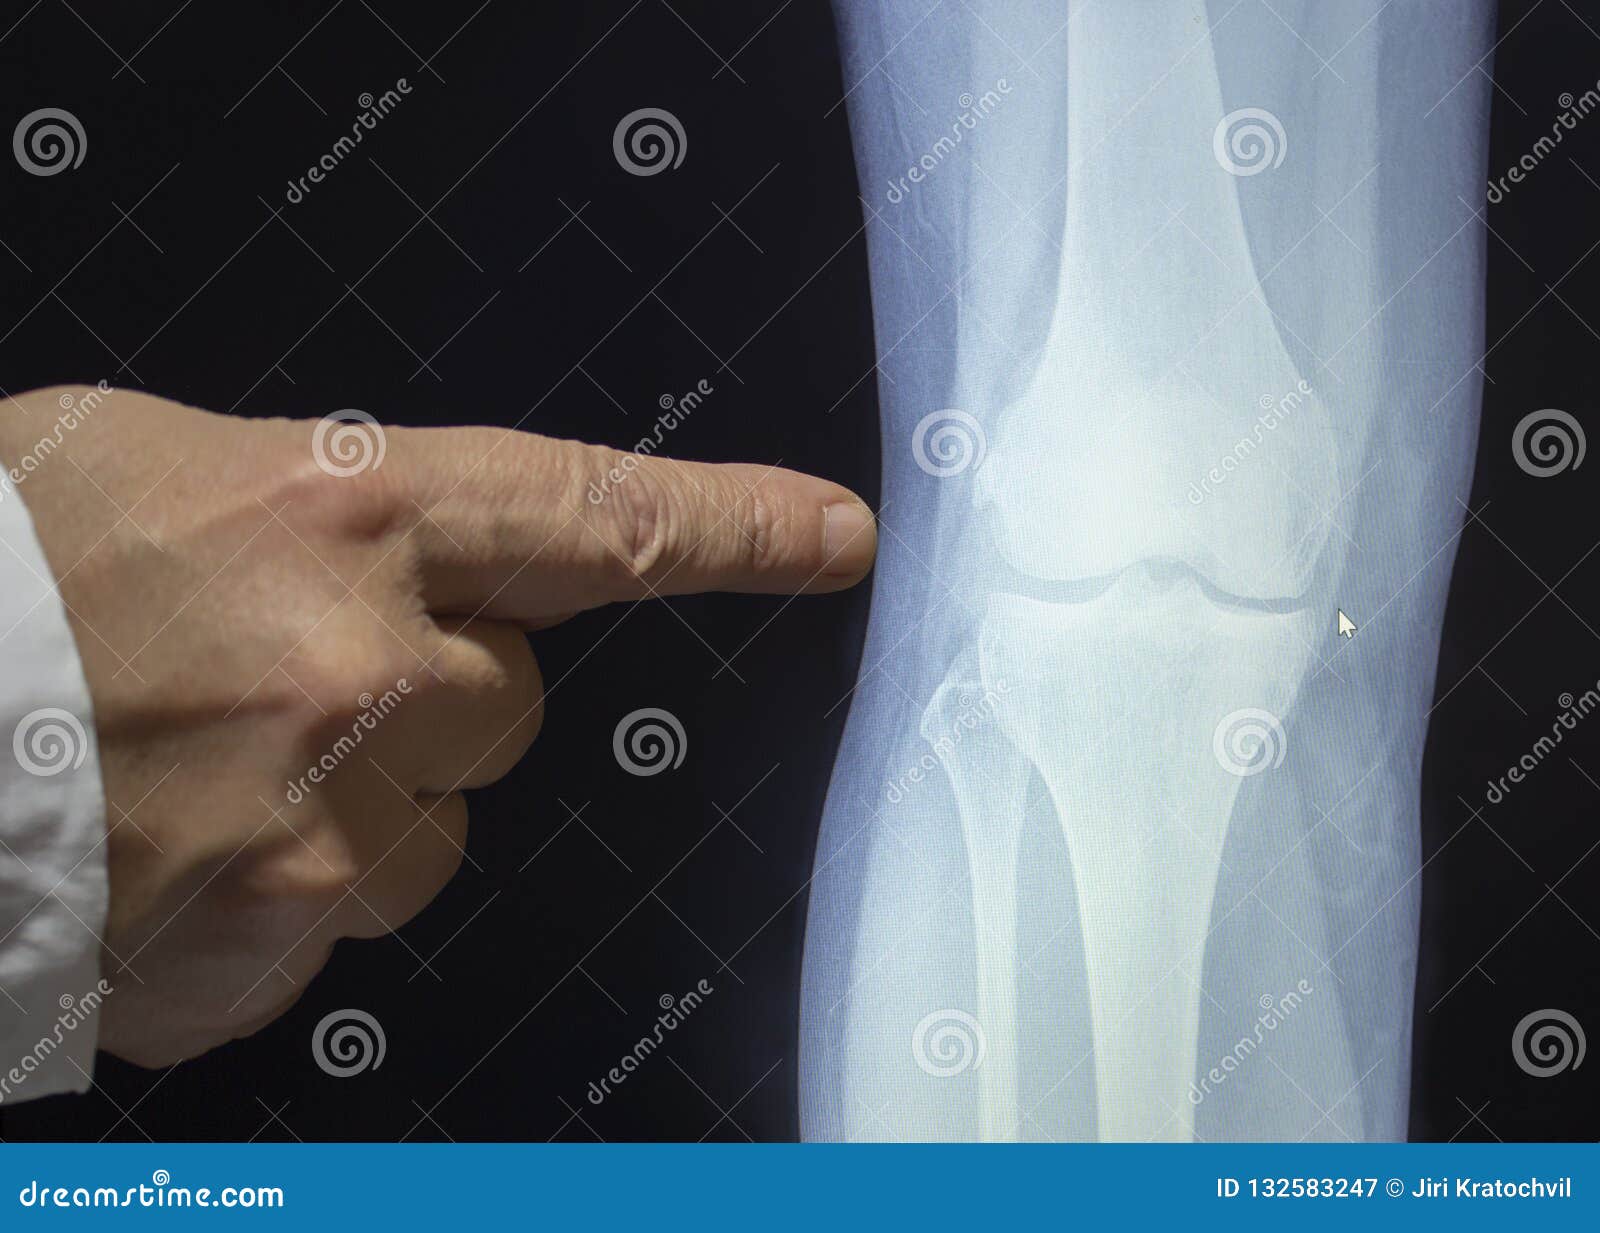 Трещина в суставе. Рентген колена. Рентген коленного сустава. Снимки коленного сустава.